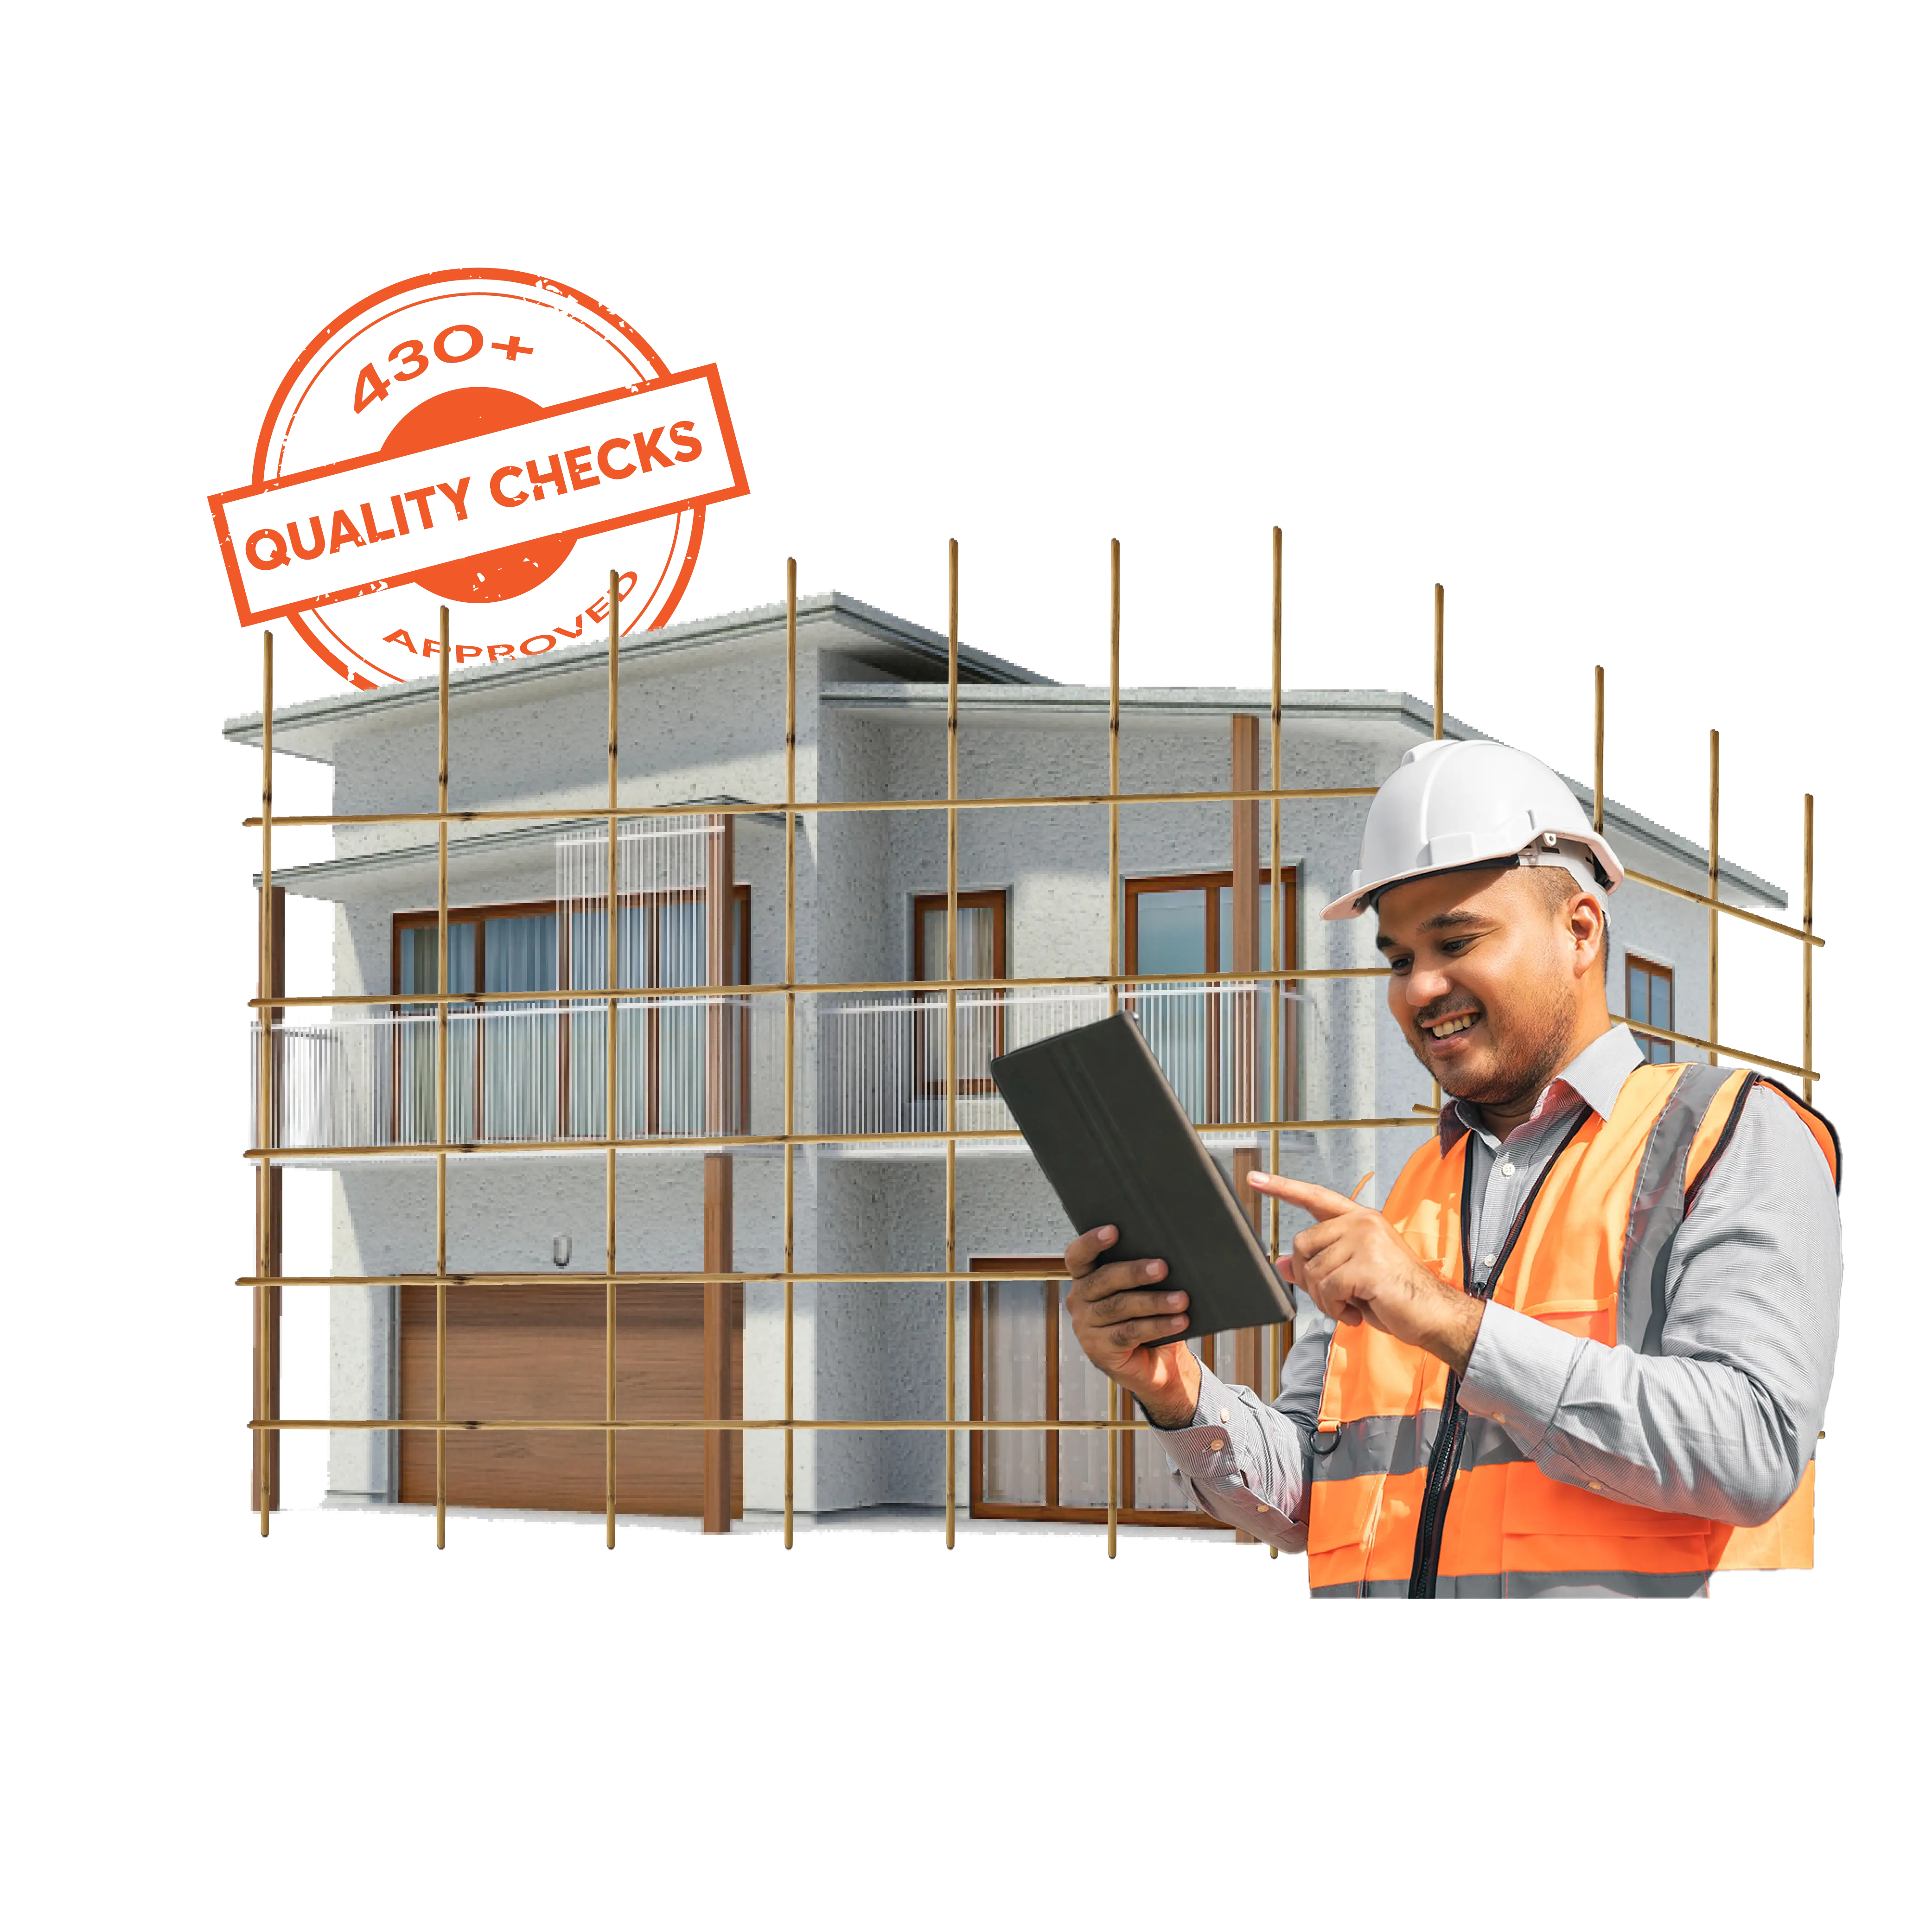 Buy Building Construction Materials in Bengaluru - Brick&Bolt, Material